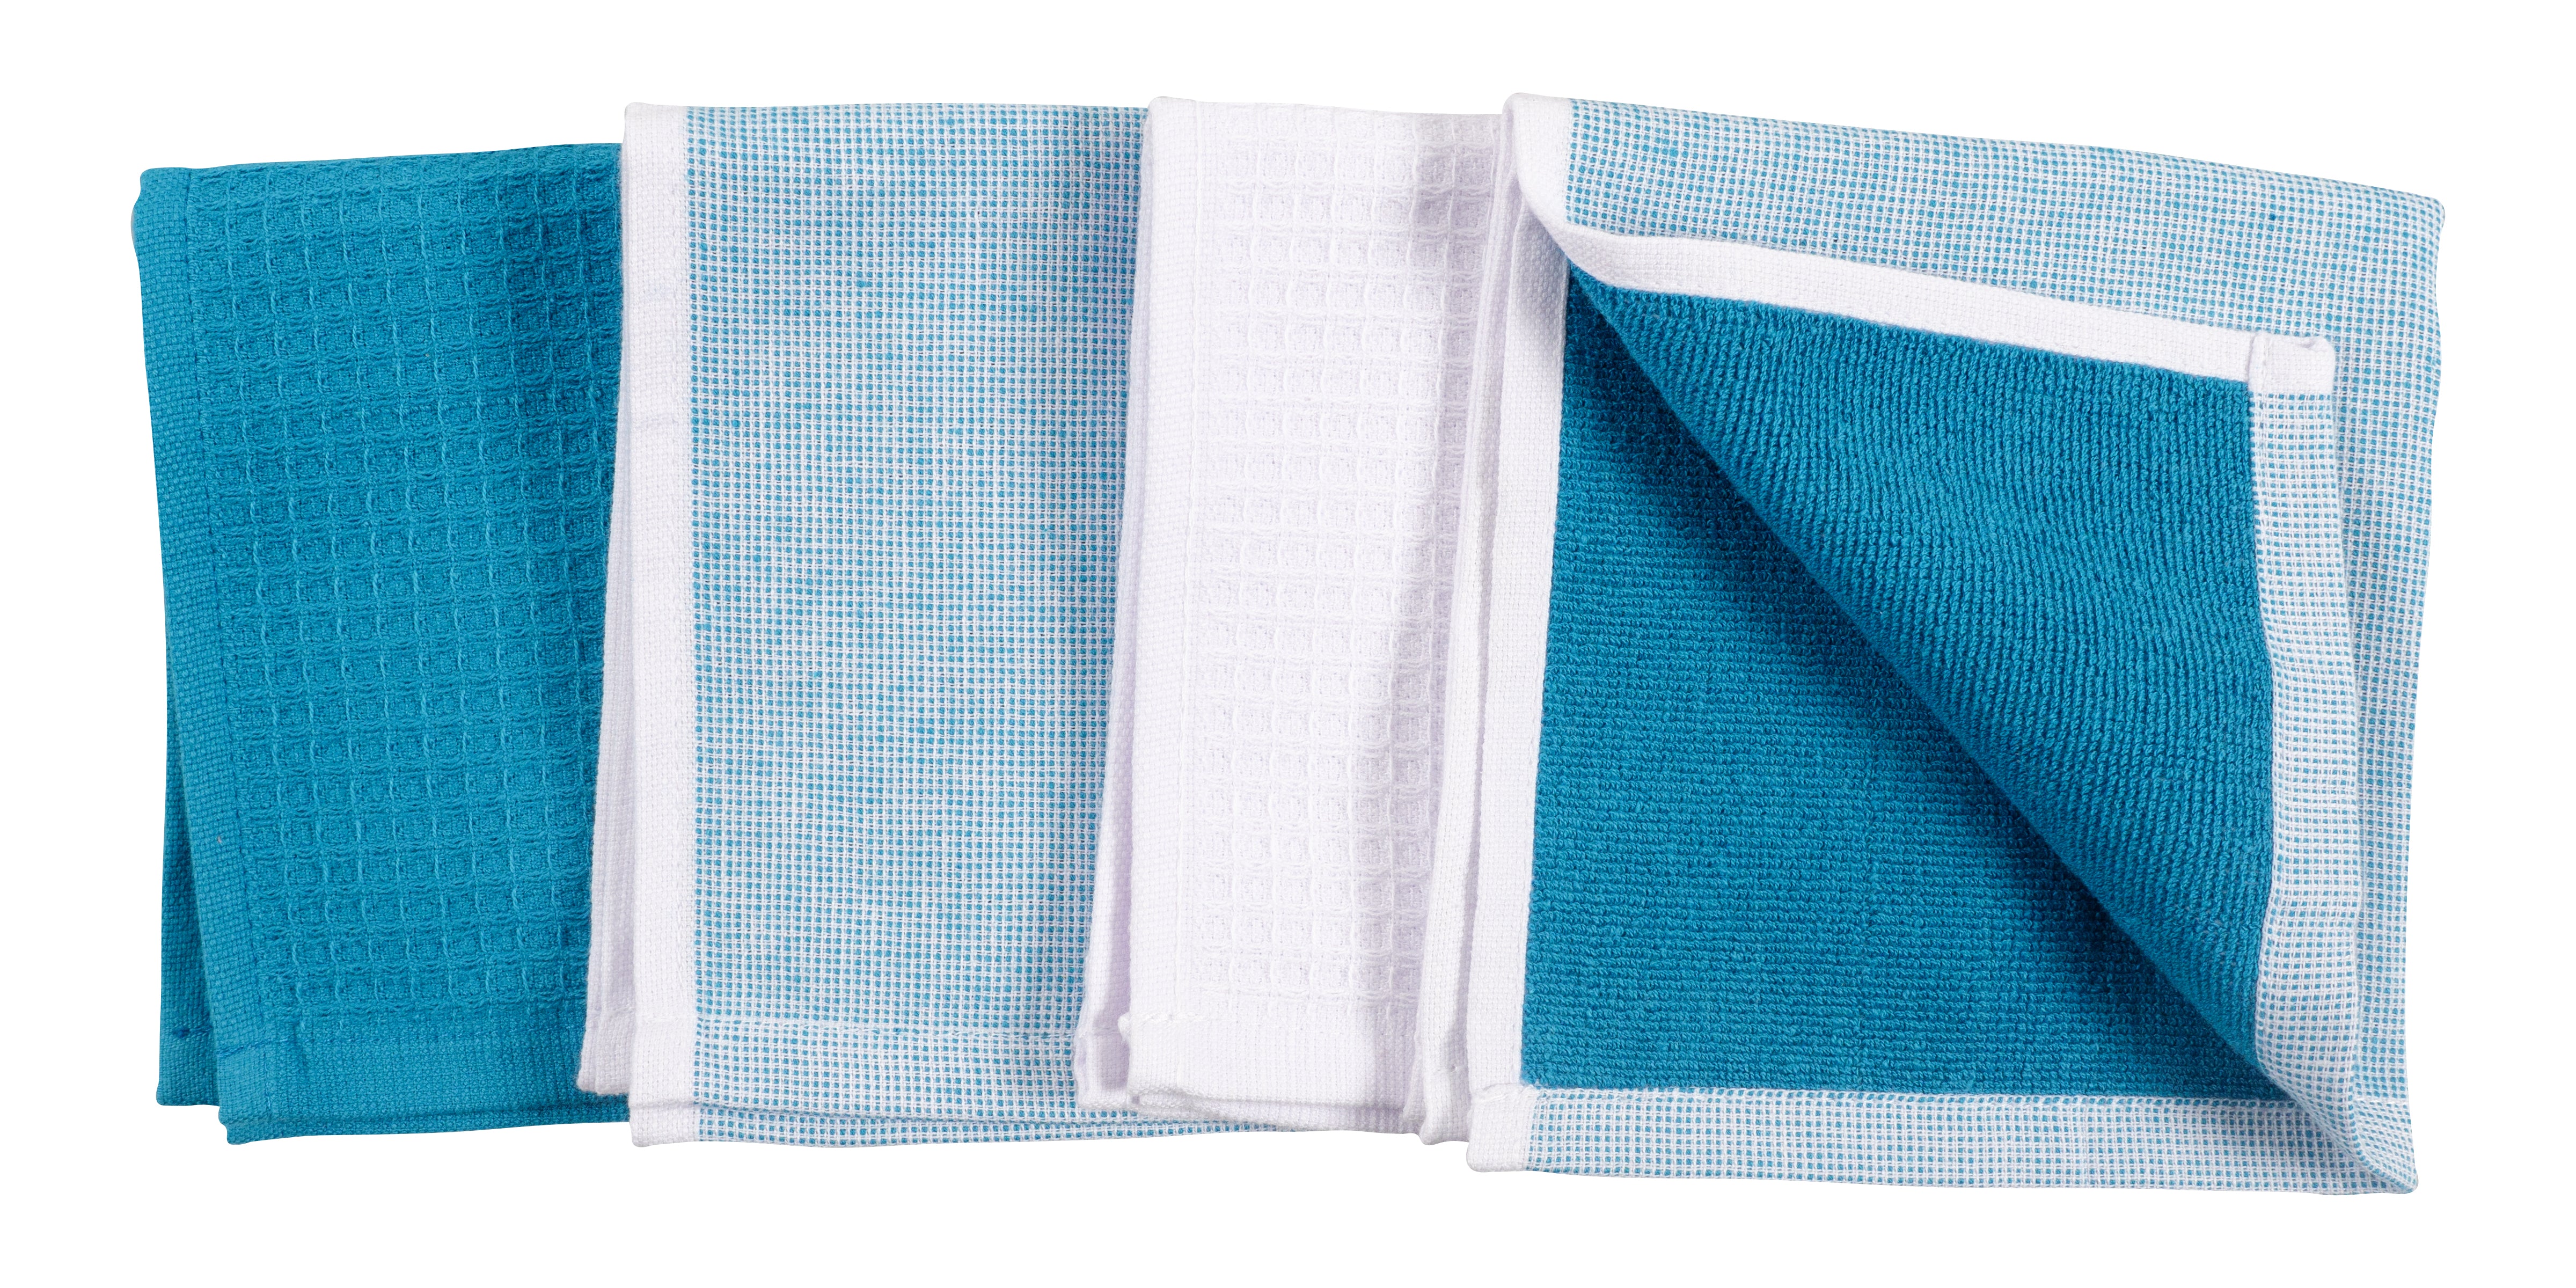 KAF Home Monaco Terry Kitchen Towel, Set of 3 - Dutch Blue